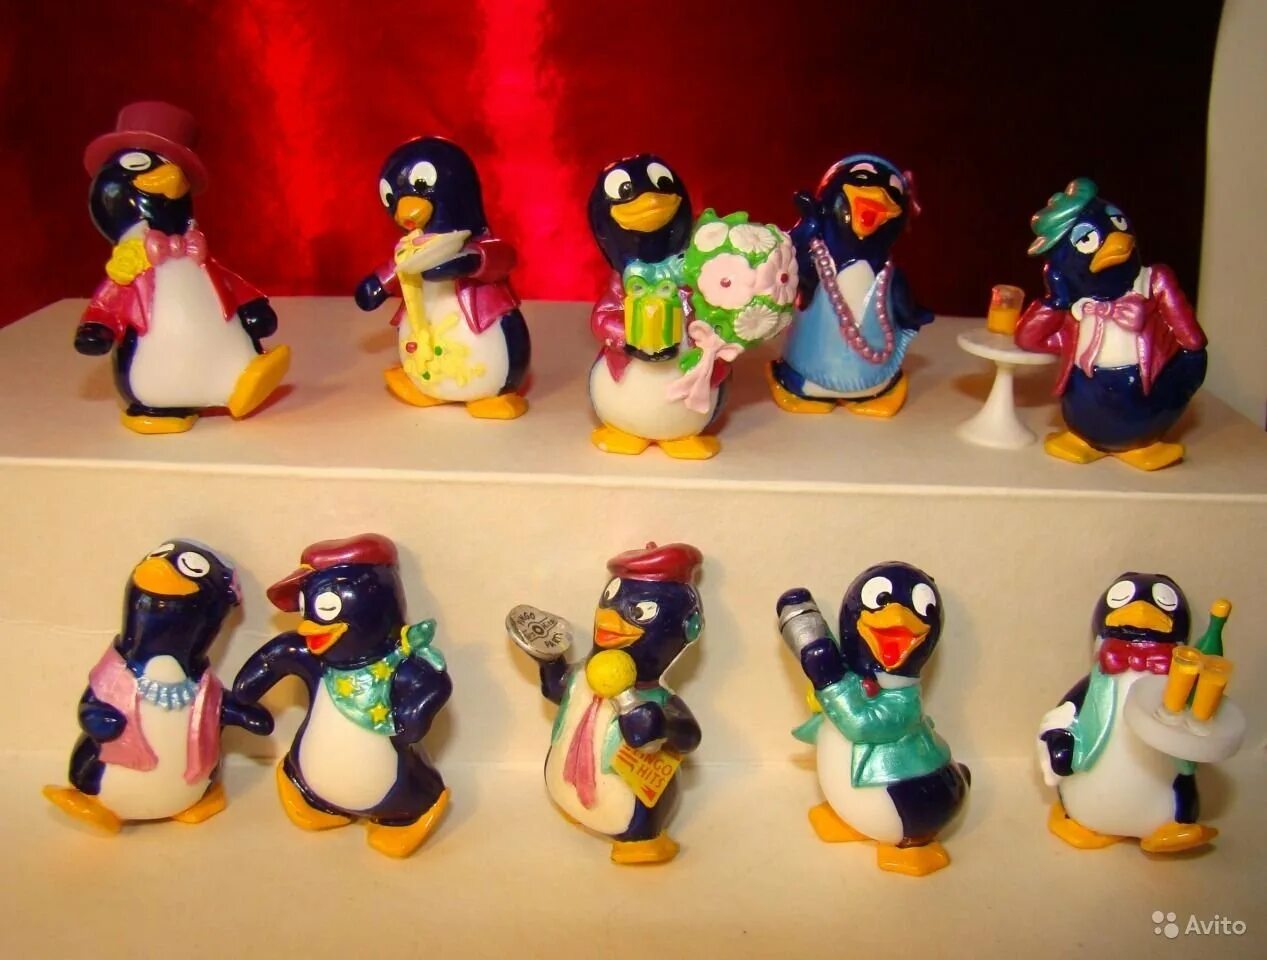 Пингвины Ферреро Киндер. Коллекция Киндер пингвинов 1992. Киндер сюрприз пингвины 1992 коллекция. Пингвин из киндера фиреро. Киндер игрушки пингвины